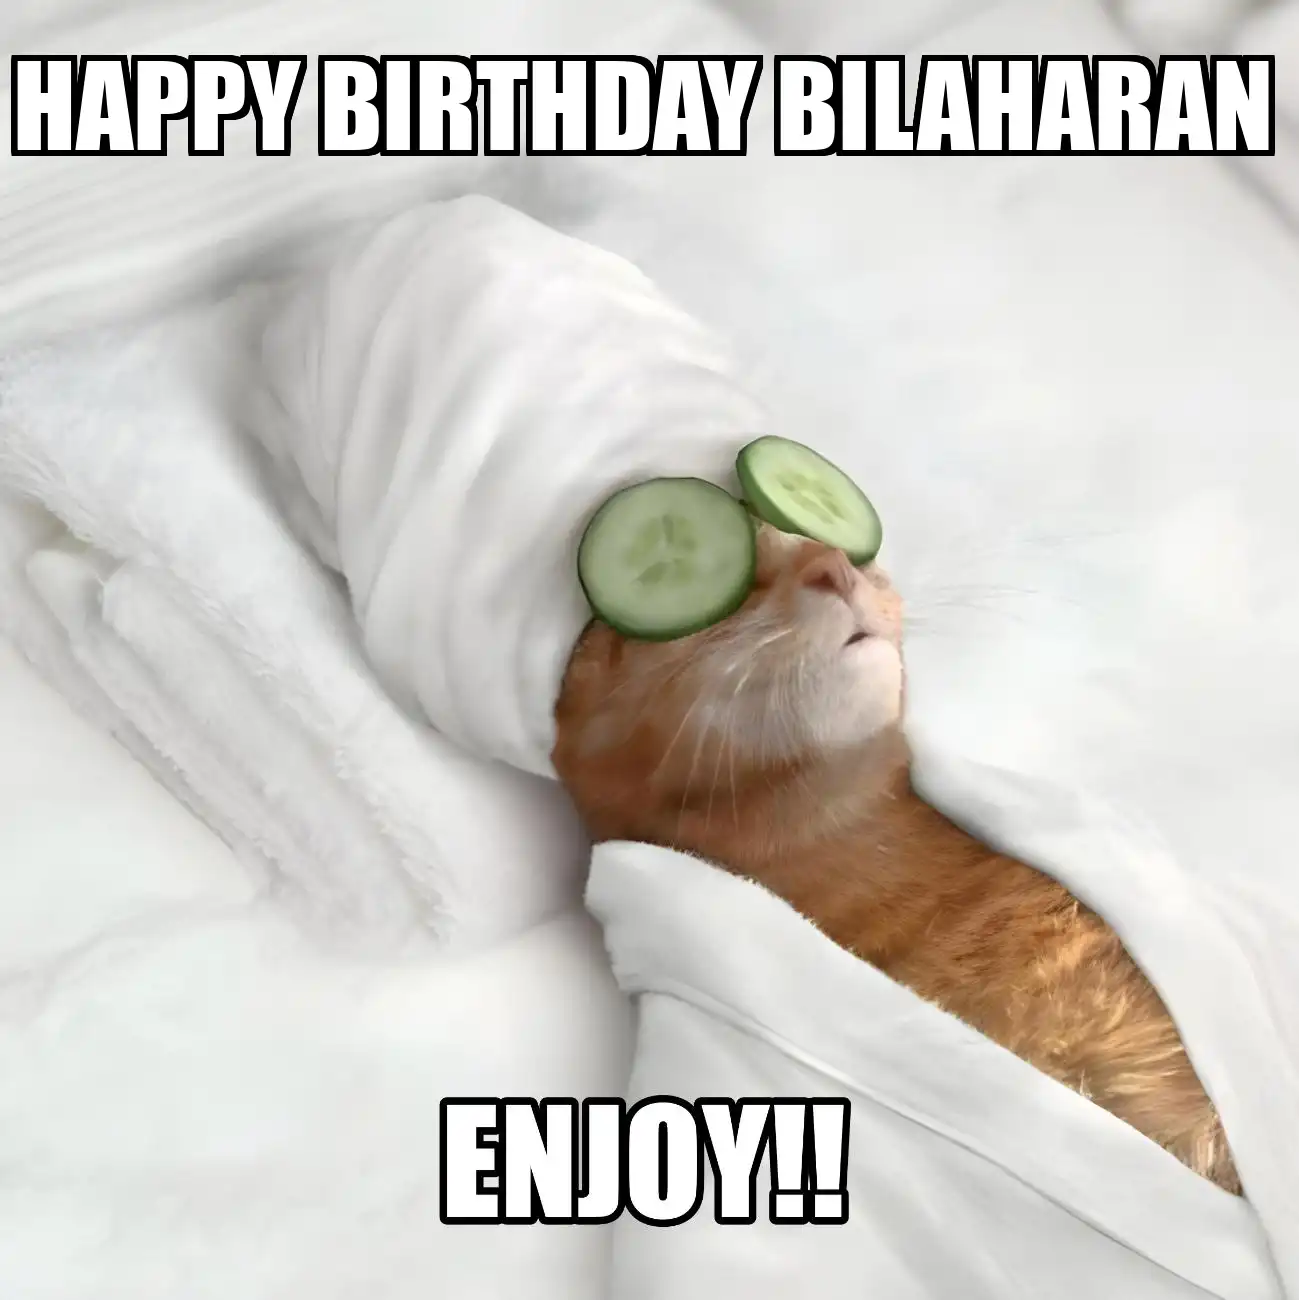 Happy Birthday Bilaharan Enjoy Cat Meme